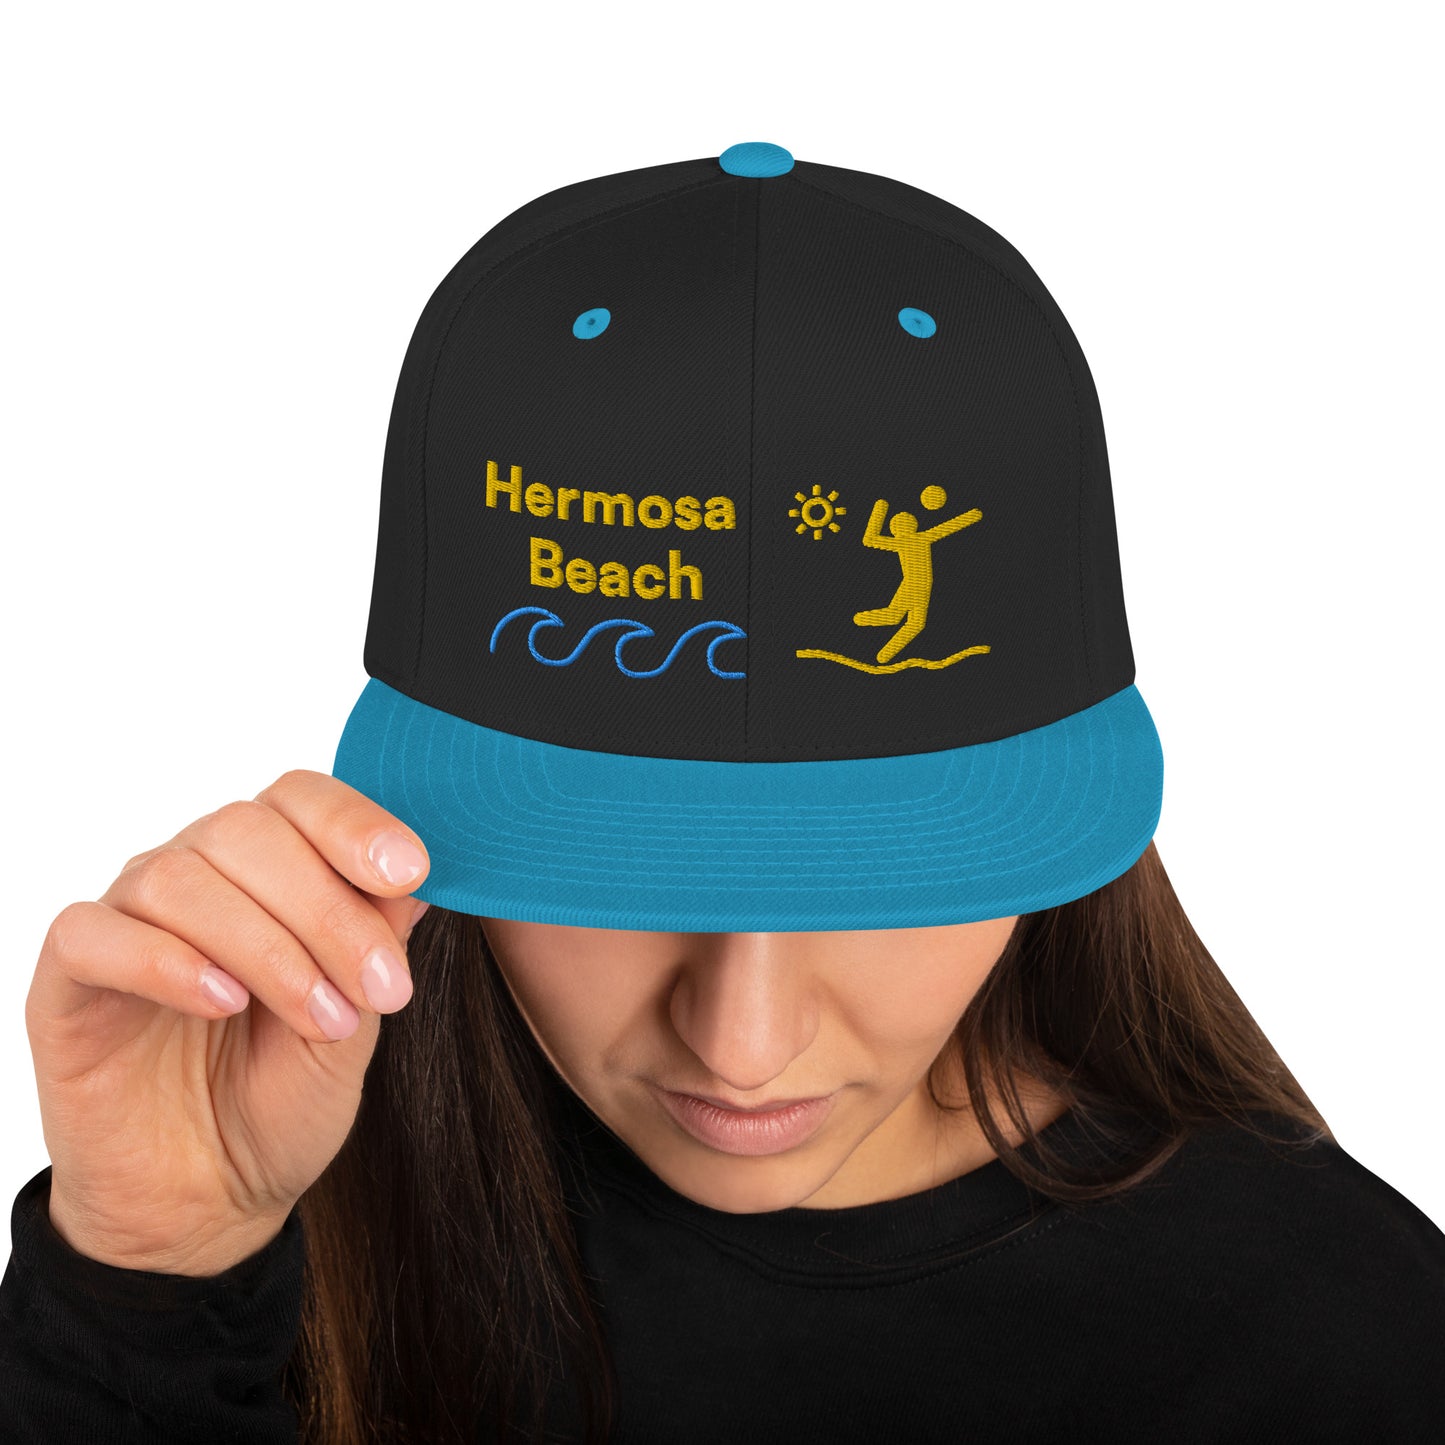 Hermosa Beach - California - South Bay - Snapback Hat - Volleyball Style